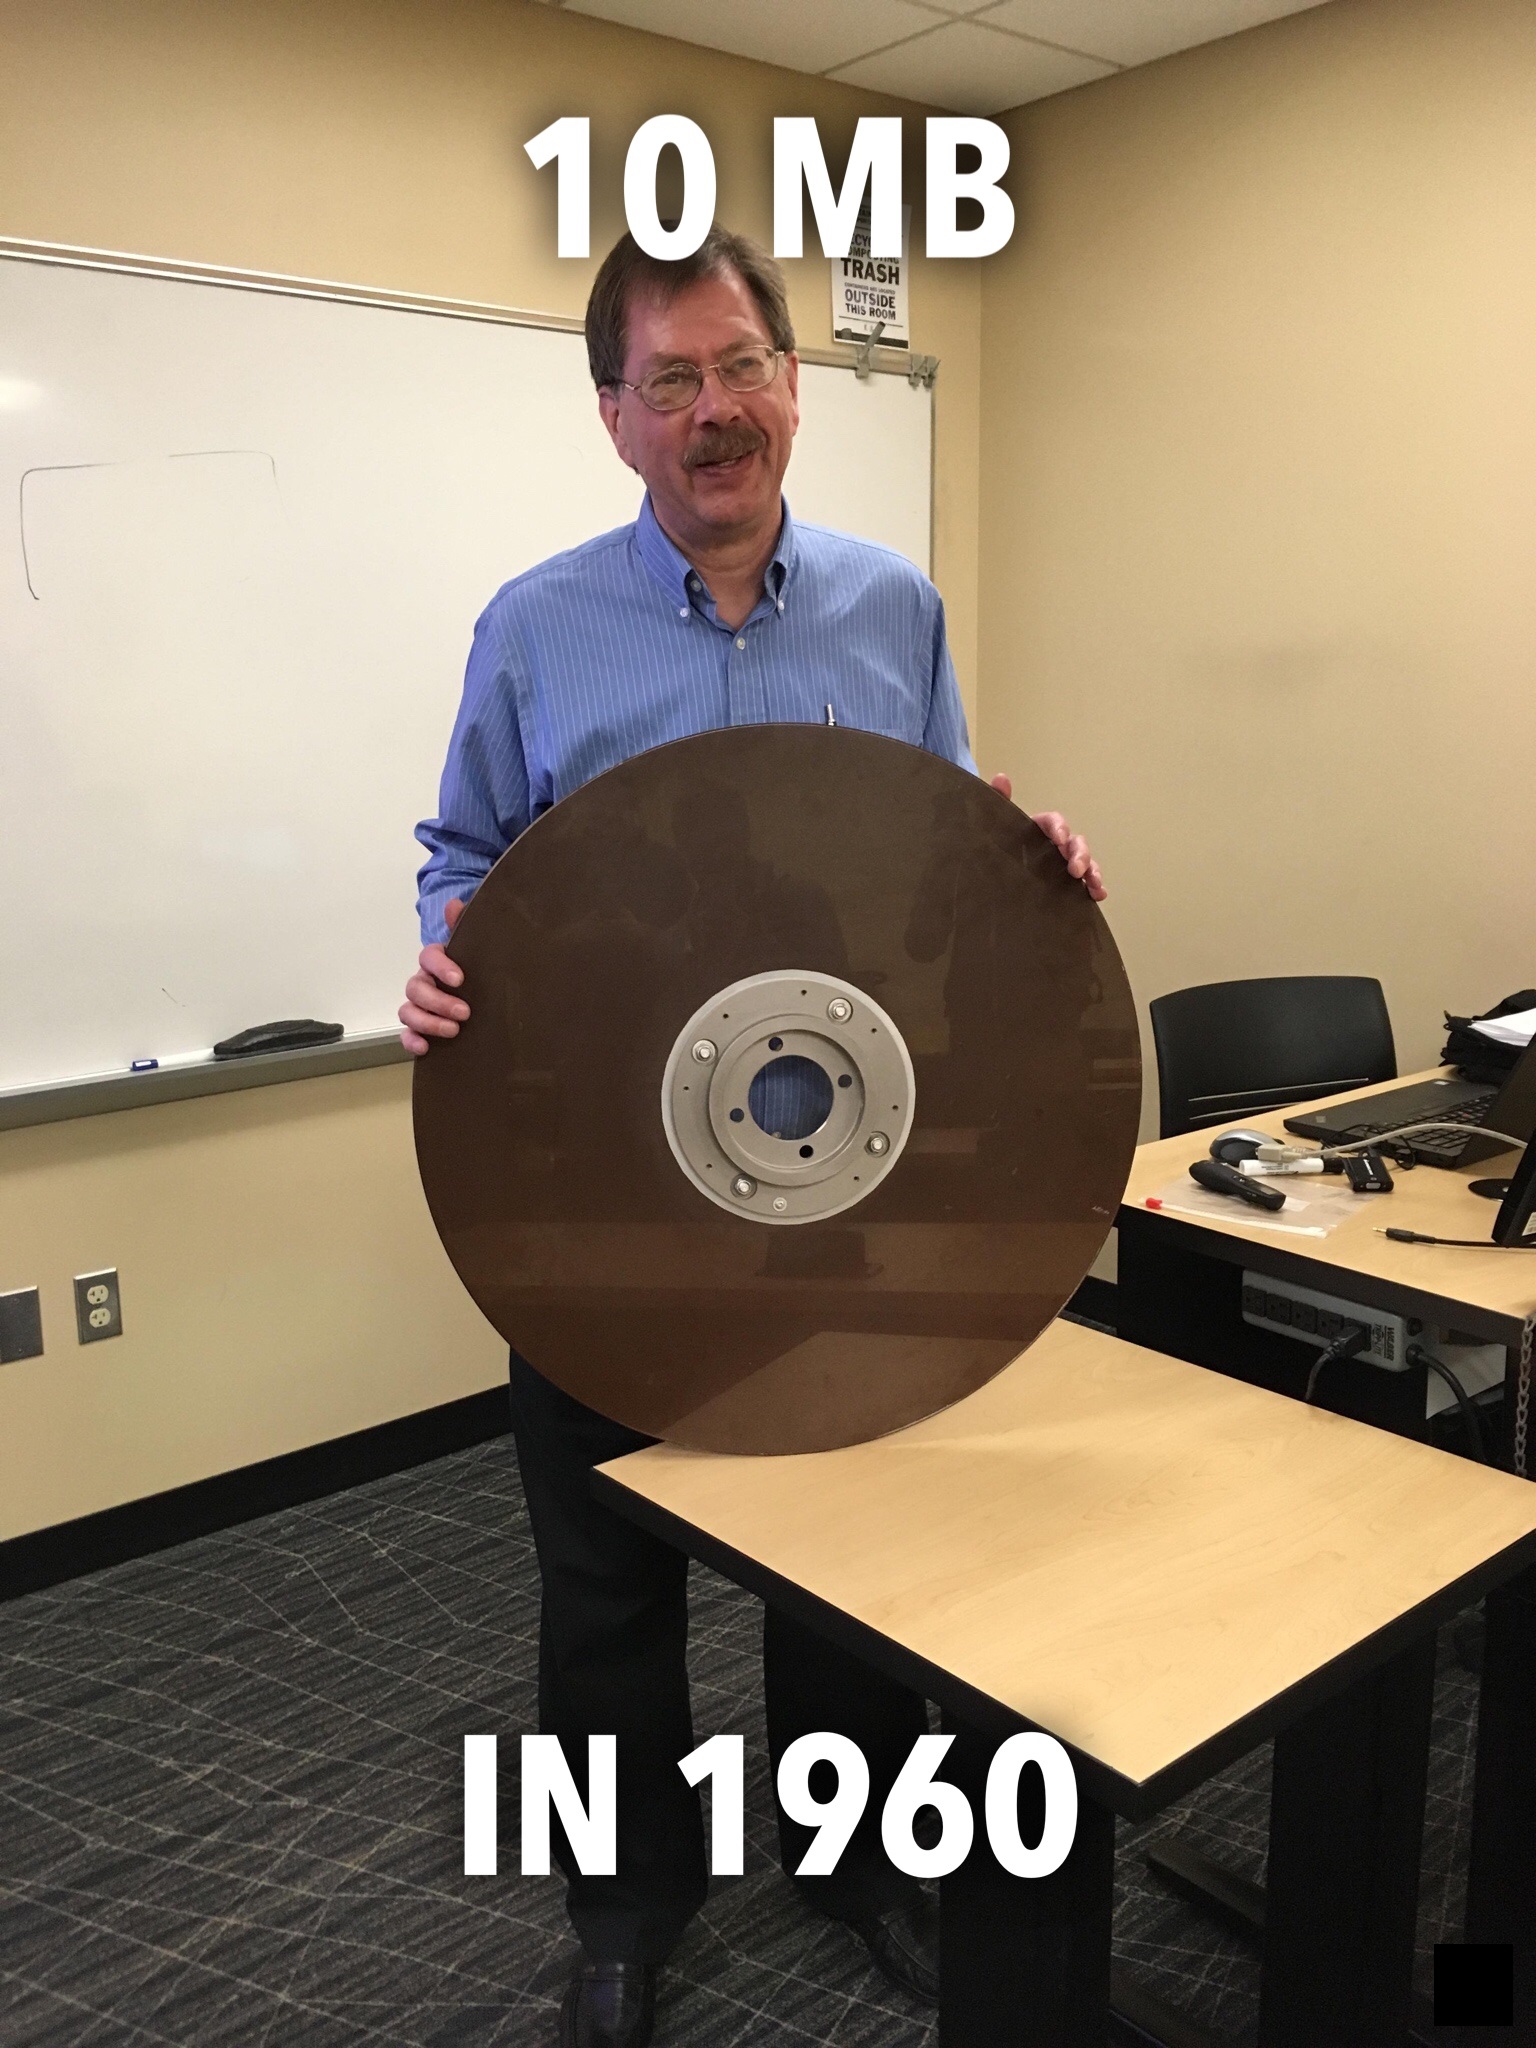 memes - 10 mb hard drive - 10 Mb In 1960